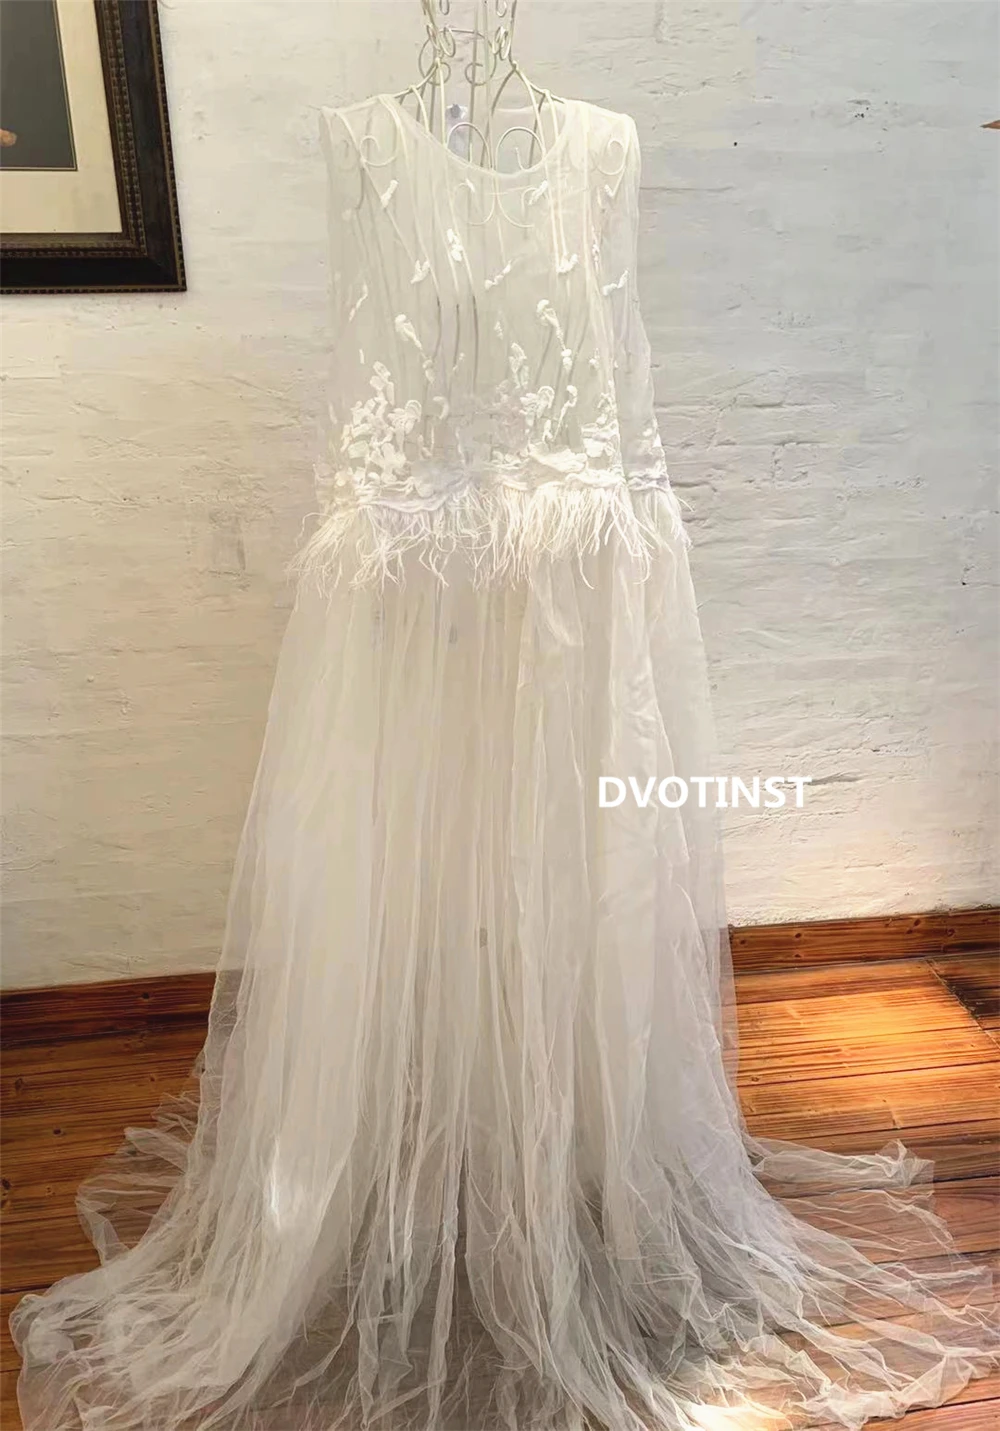 Dvotinst Photography Props Maternity Dresses for Photo Shoot Pregnancy Dress Pregnant White Lace Perspective Elegant Studio Prop enlarge